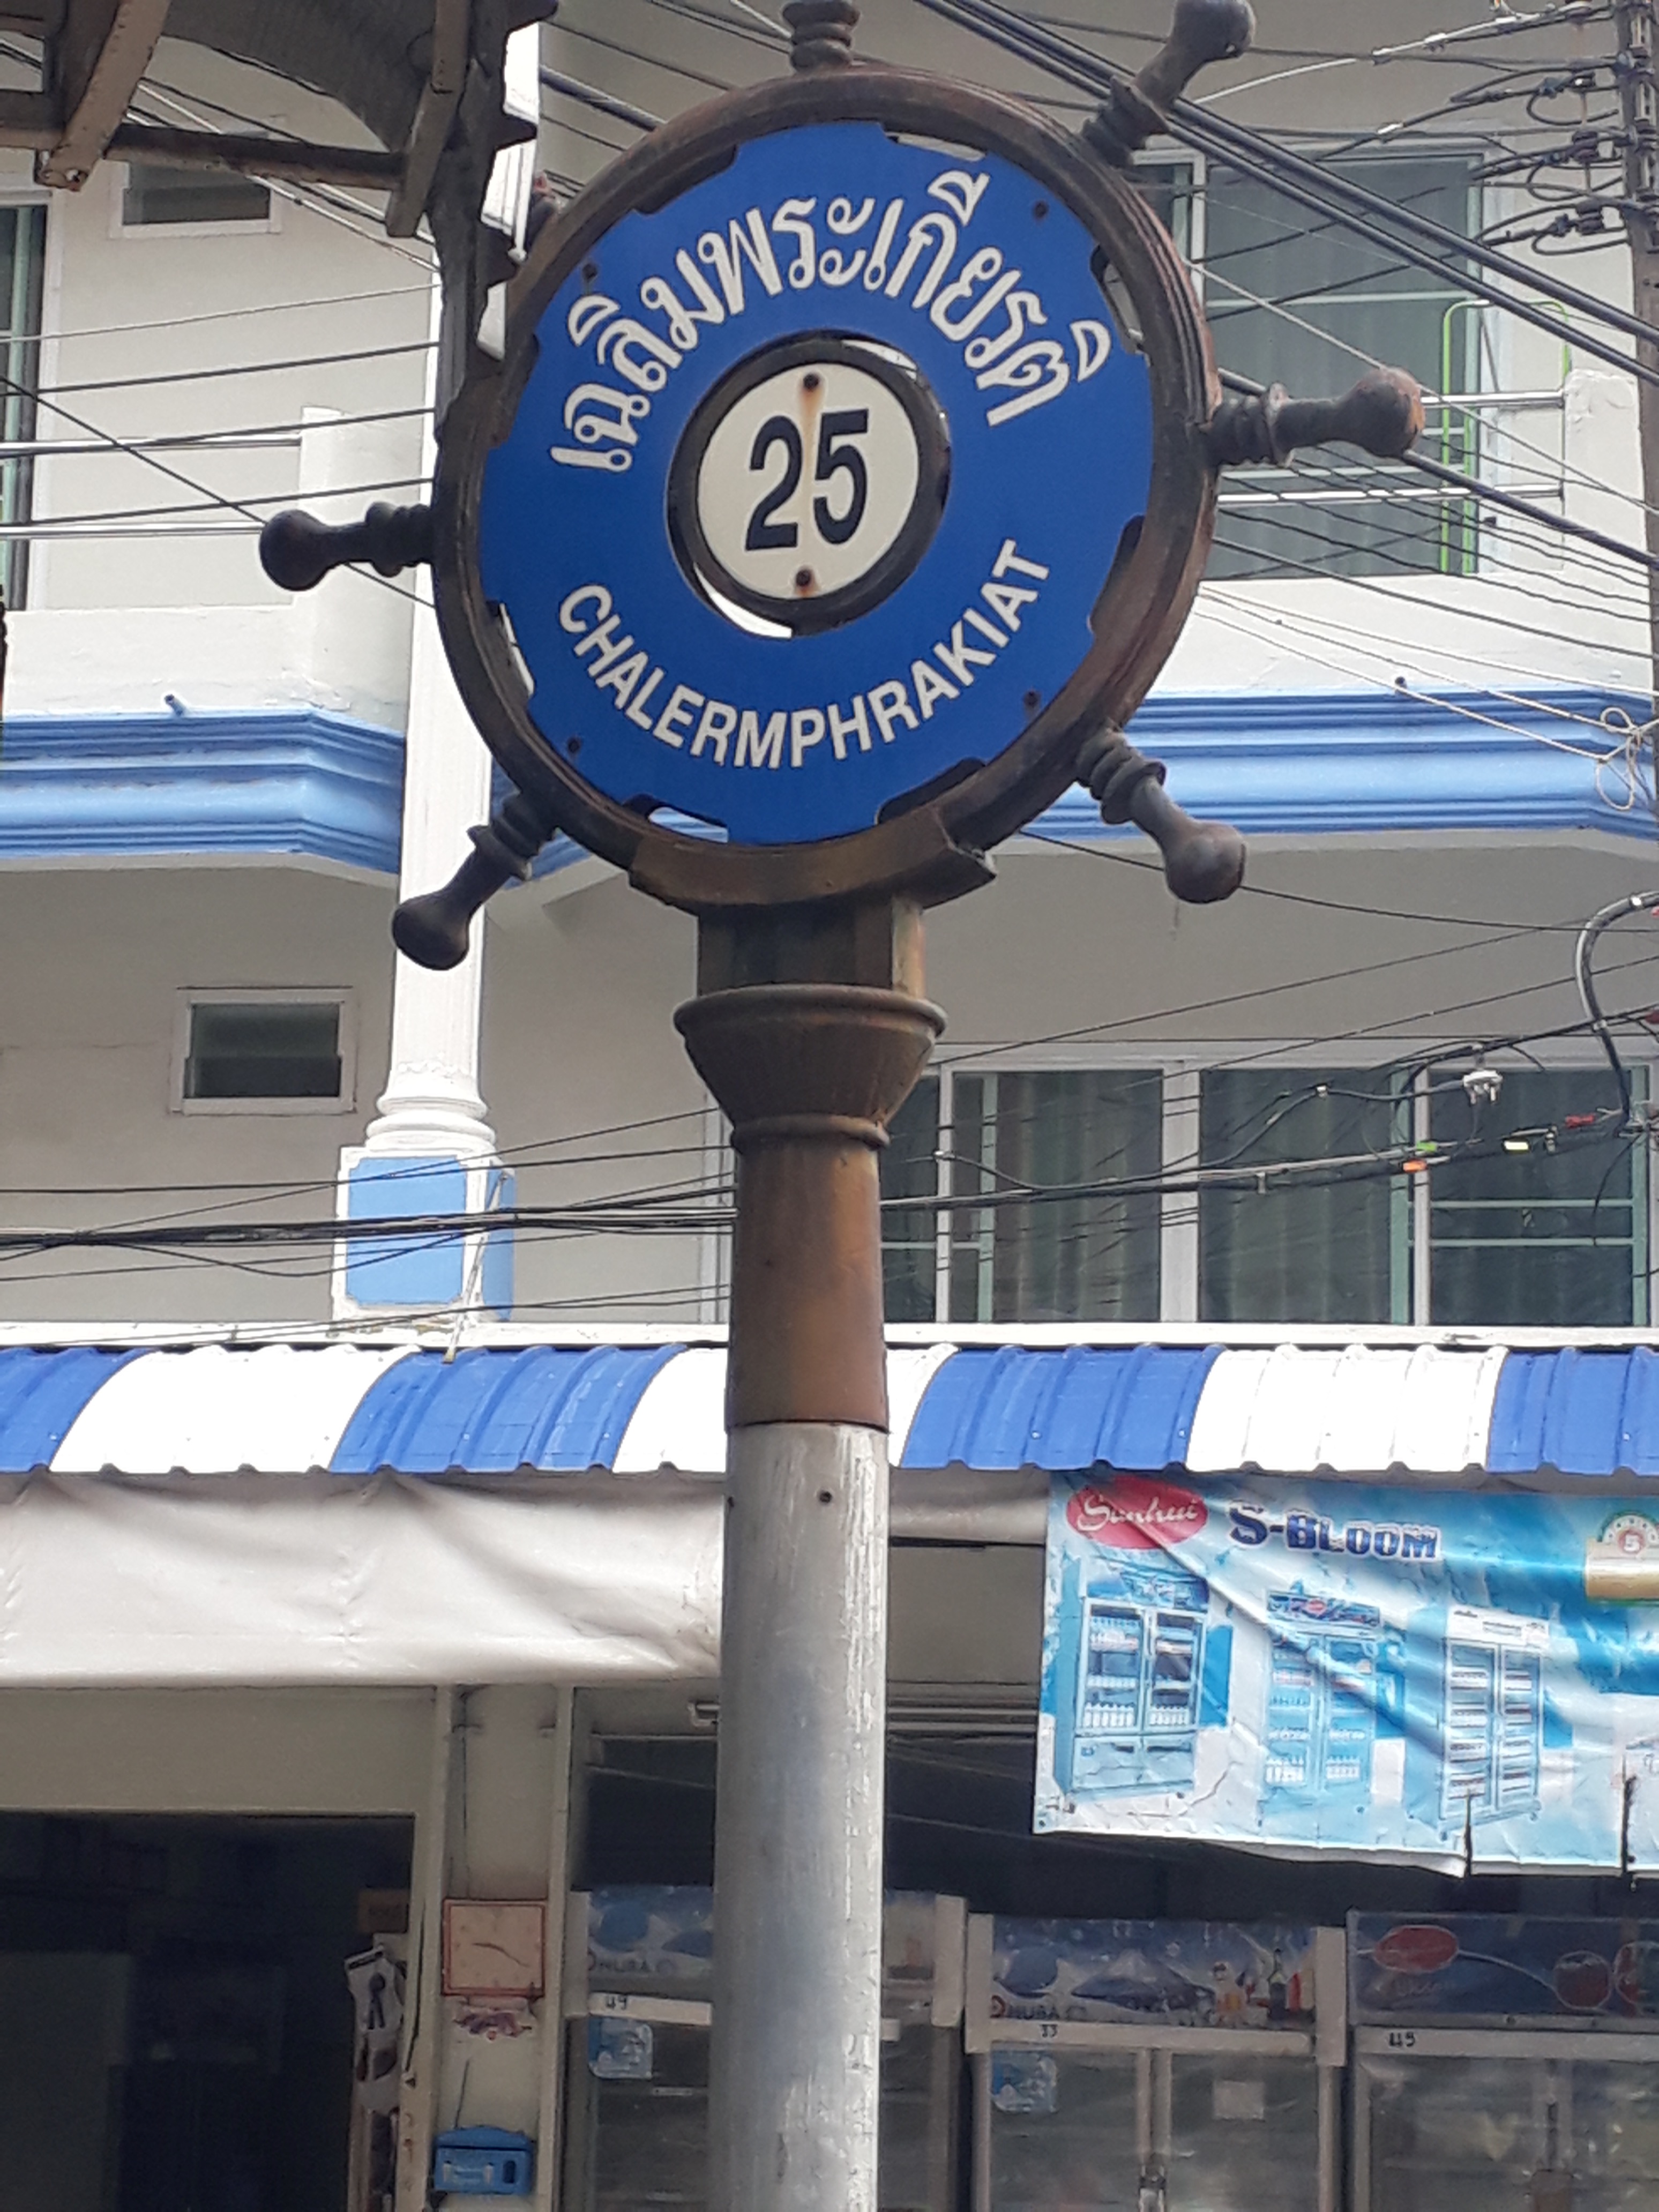 Happy Ending Massage In Pattaya